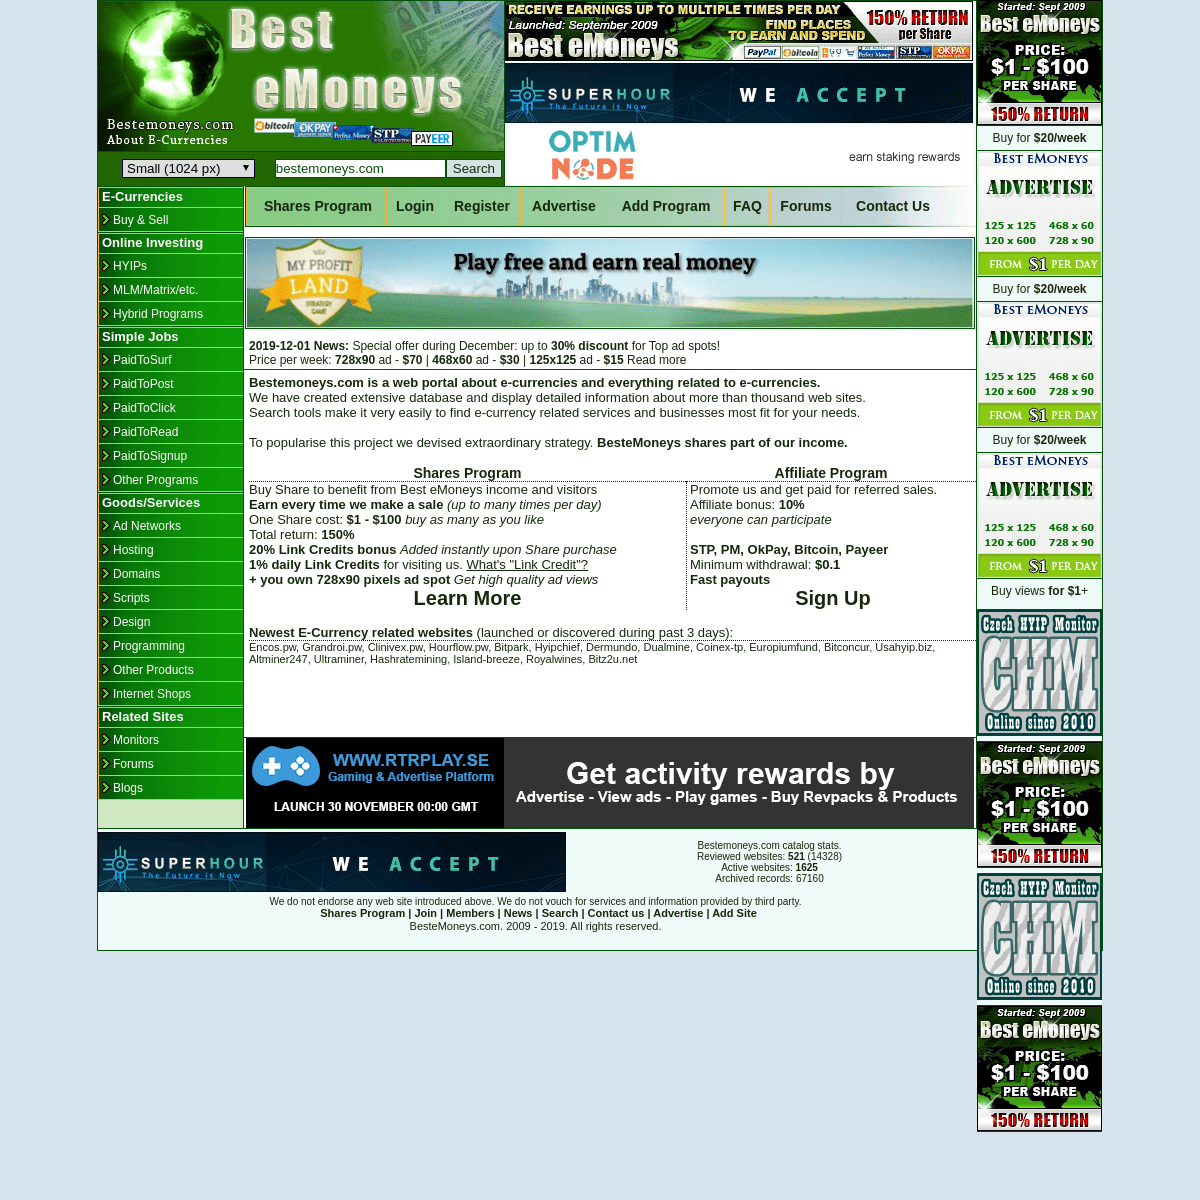 A complete backup of bestemoneys.com